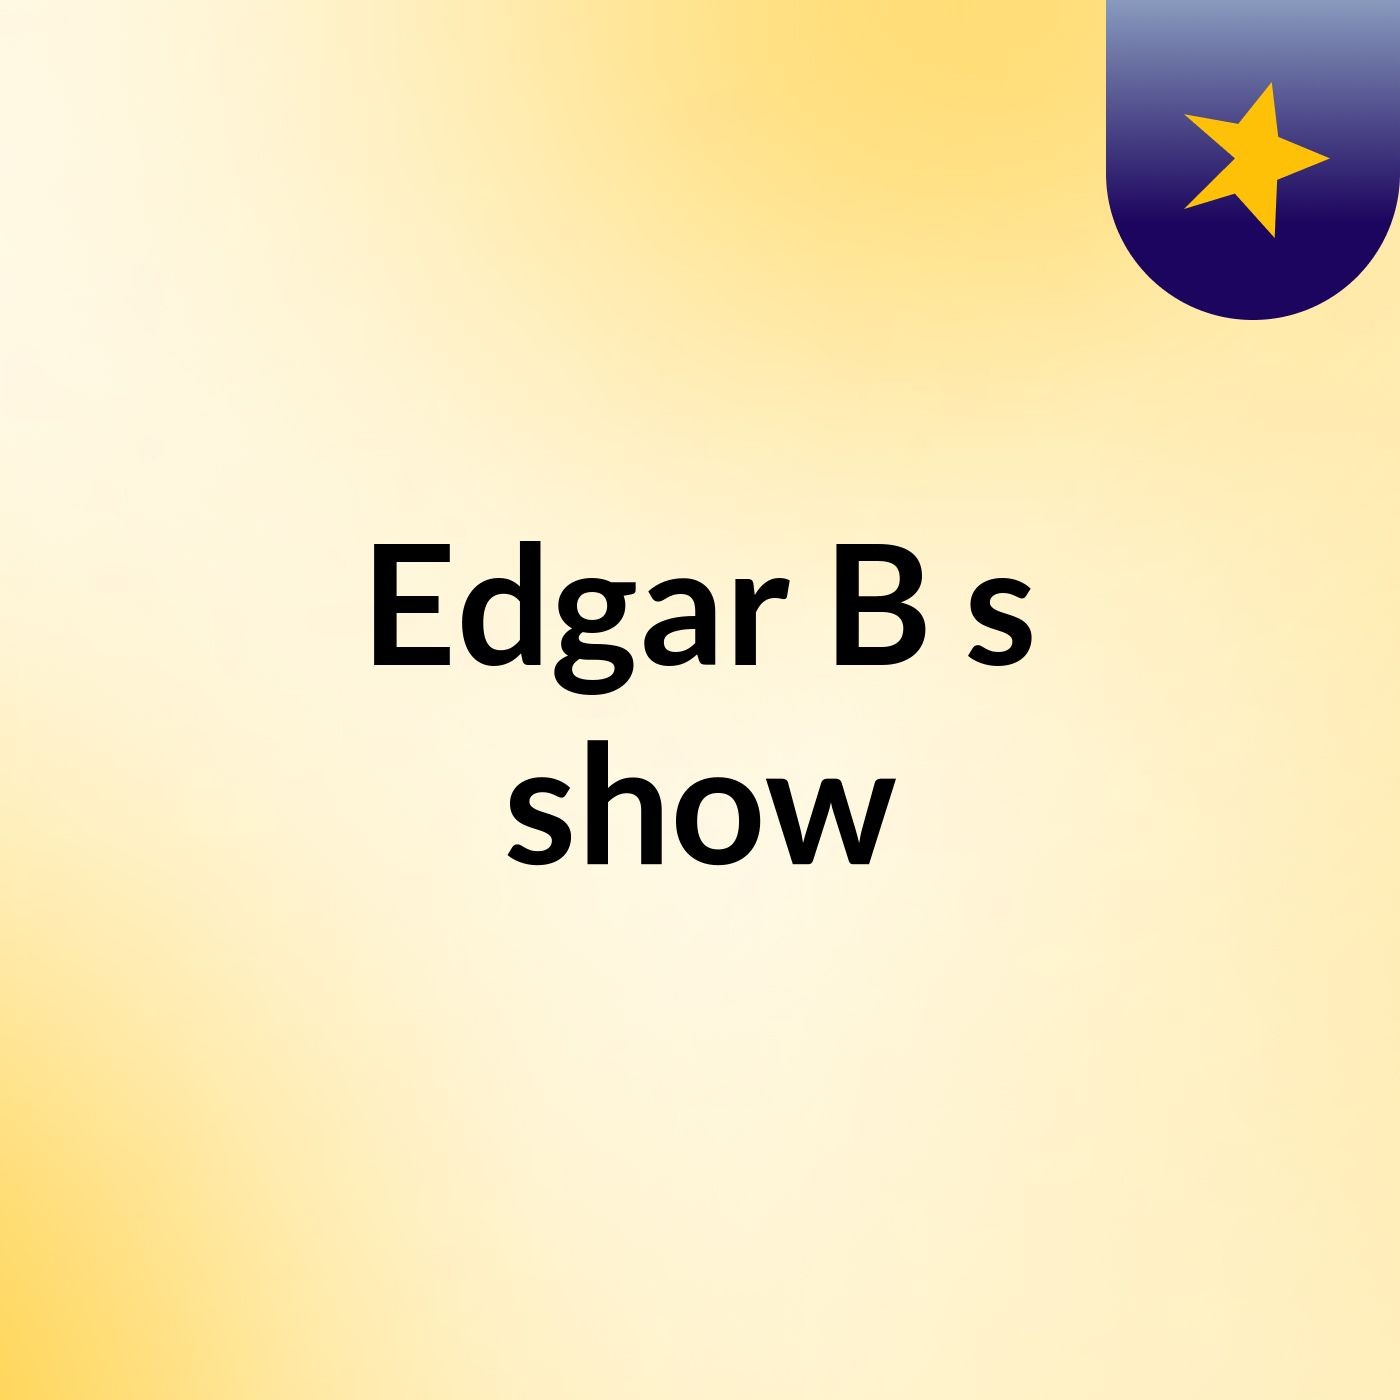 Edgar B's show